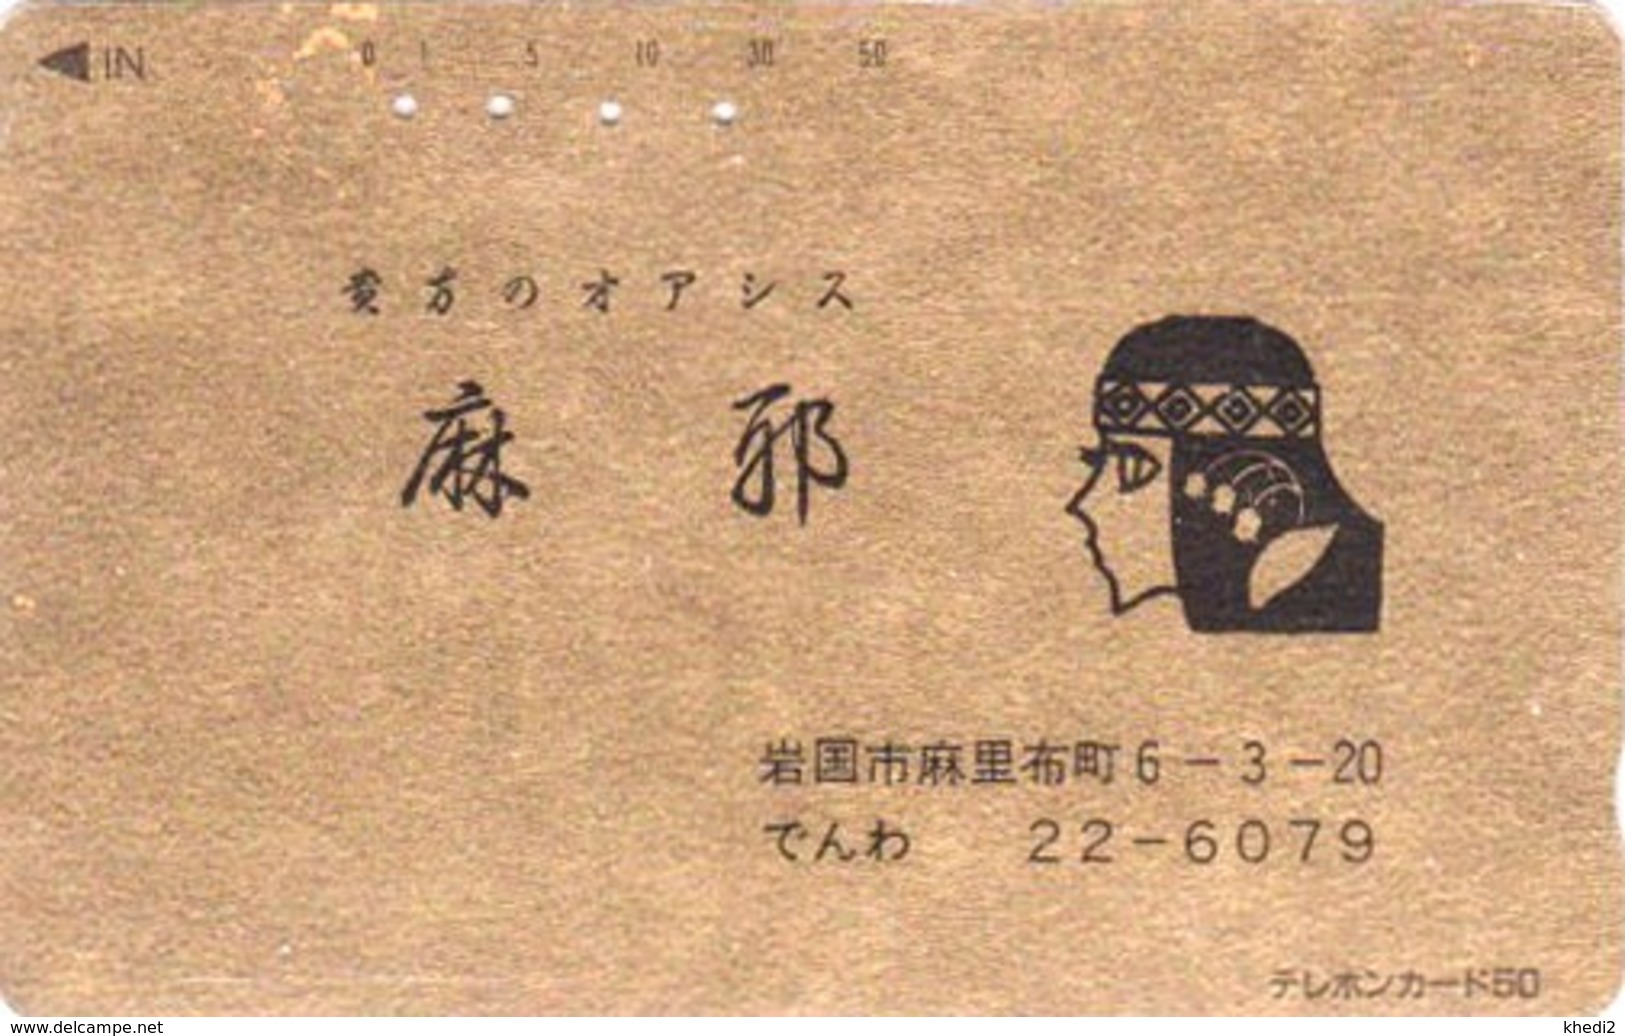 Télécarte DOREE Japon / 110-118 - EGYPTE - CLEOPATRE Pub Snack Oasis - EGYPT Rel Japan GOLD Phonecard - MD 232 - Cultura